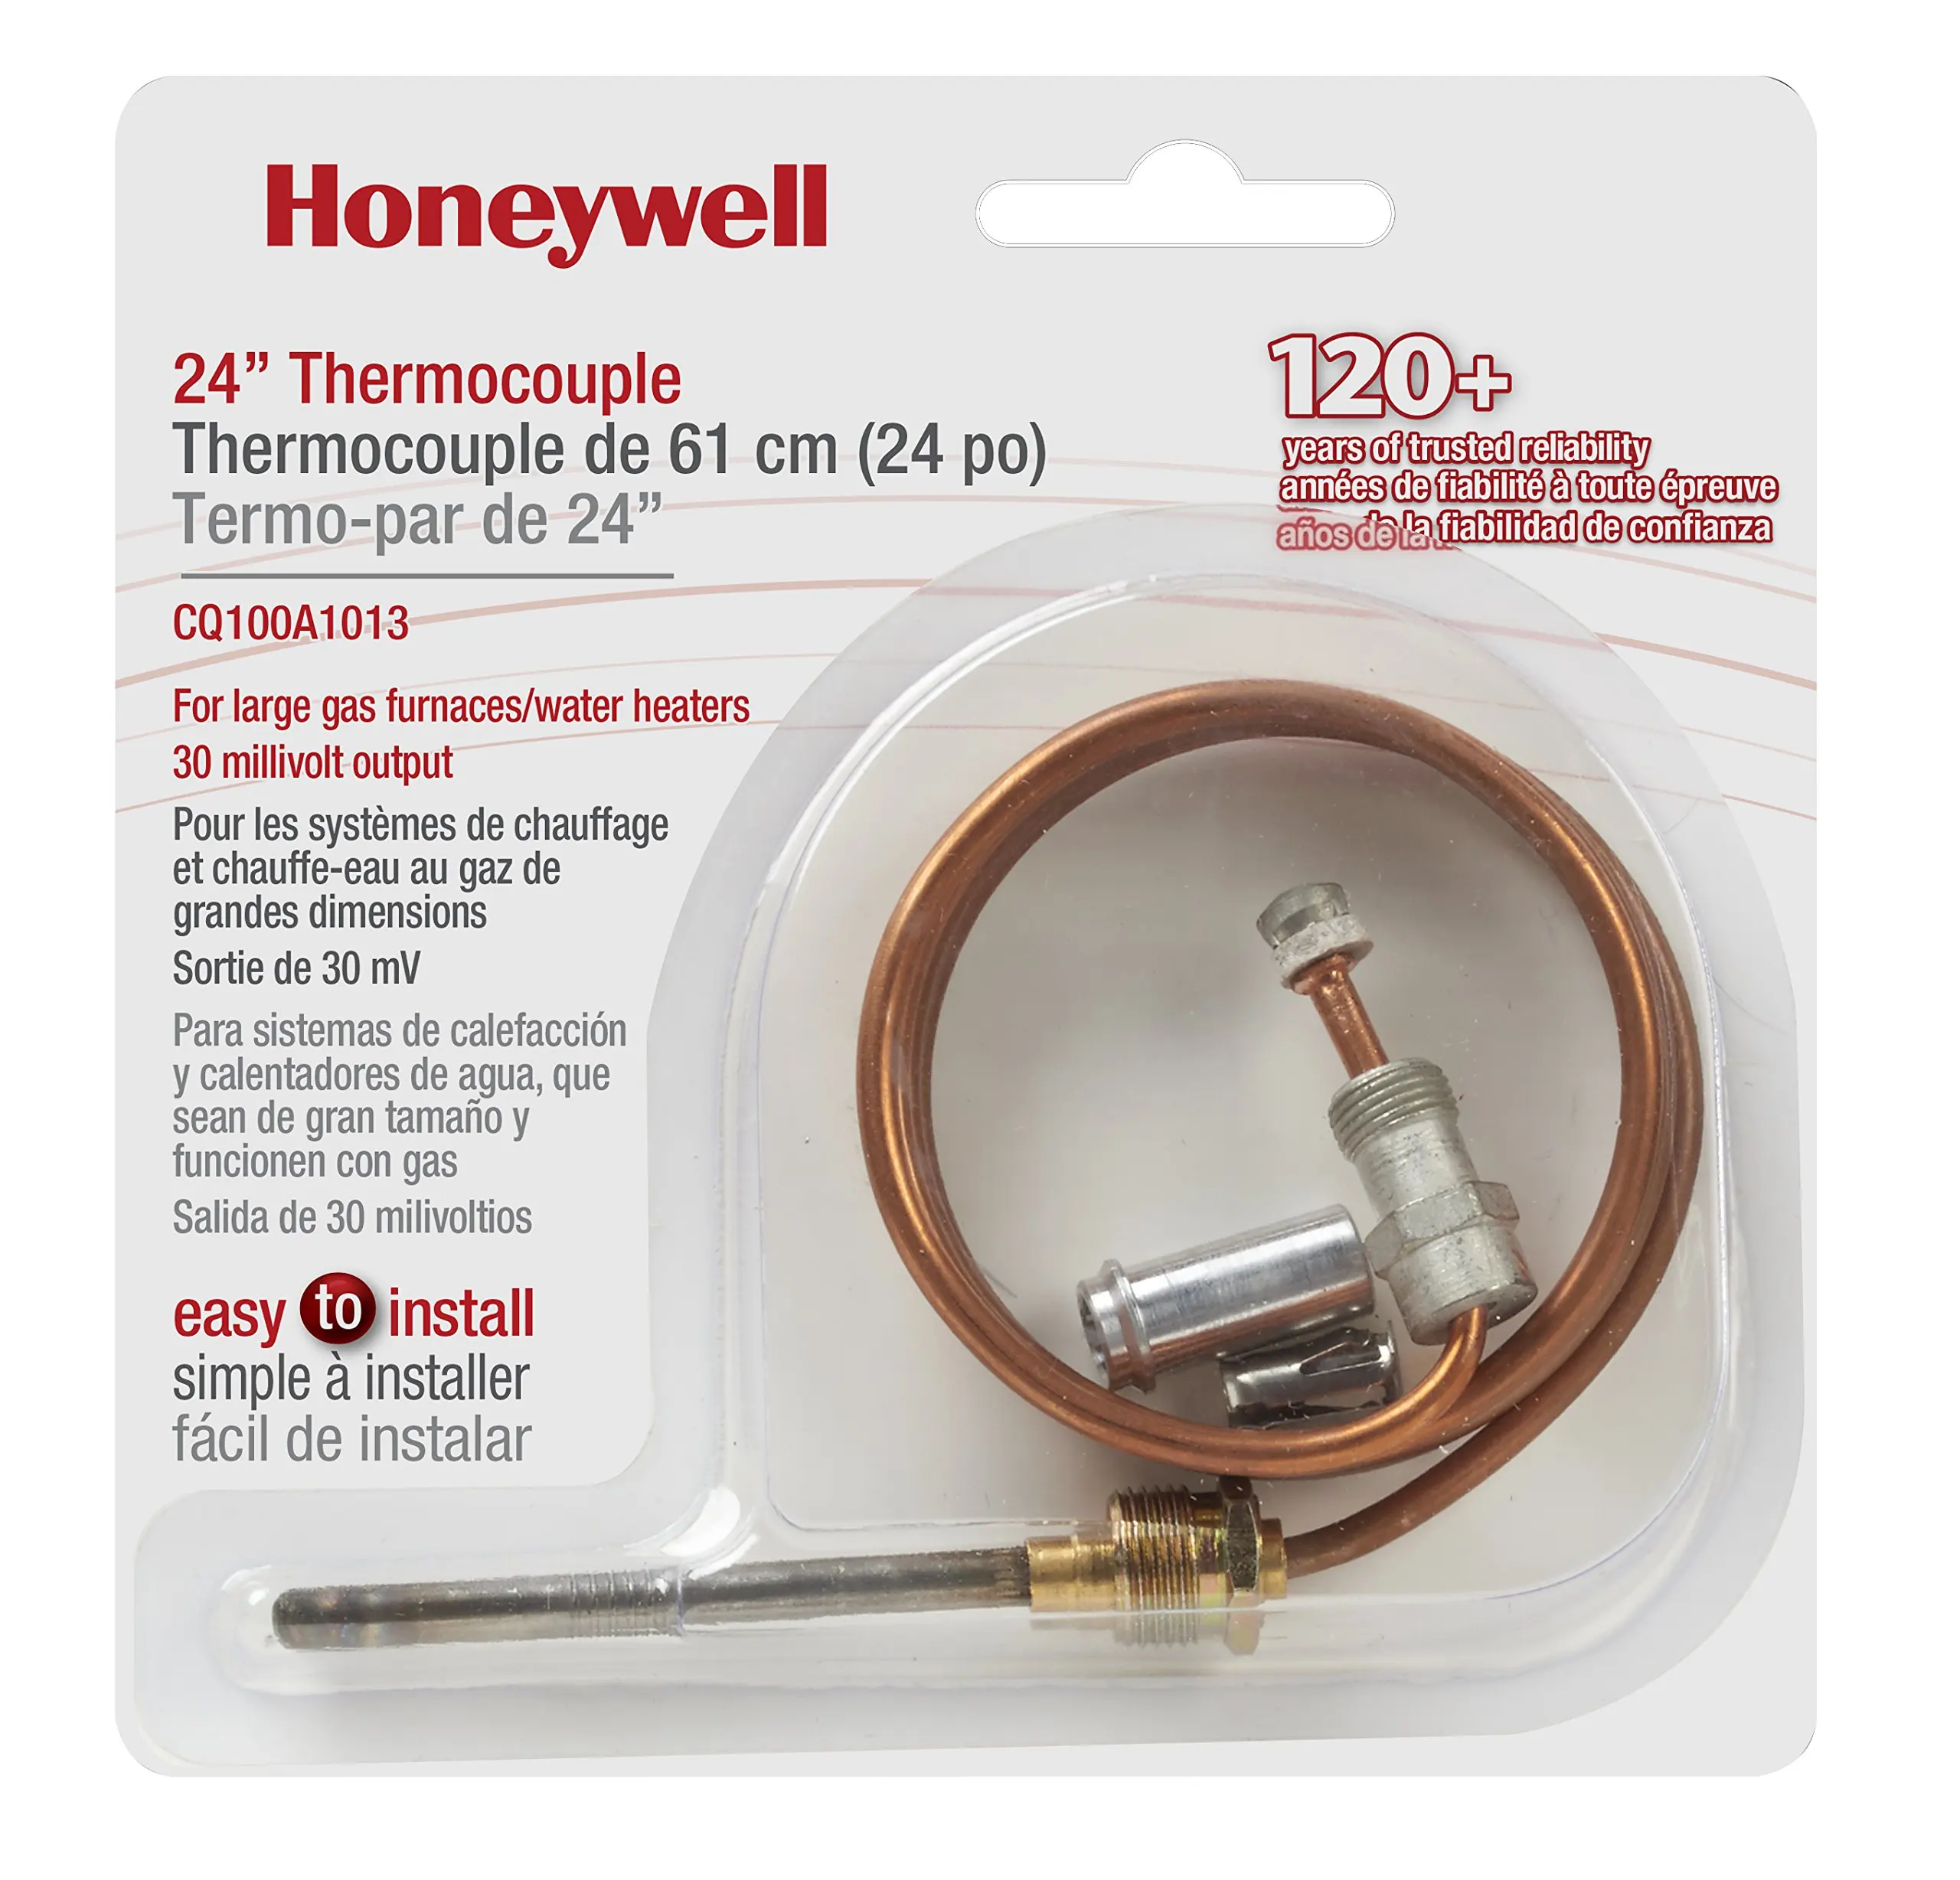 Honeywell CQ100A1005 36 Universal Thermocouple Kits